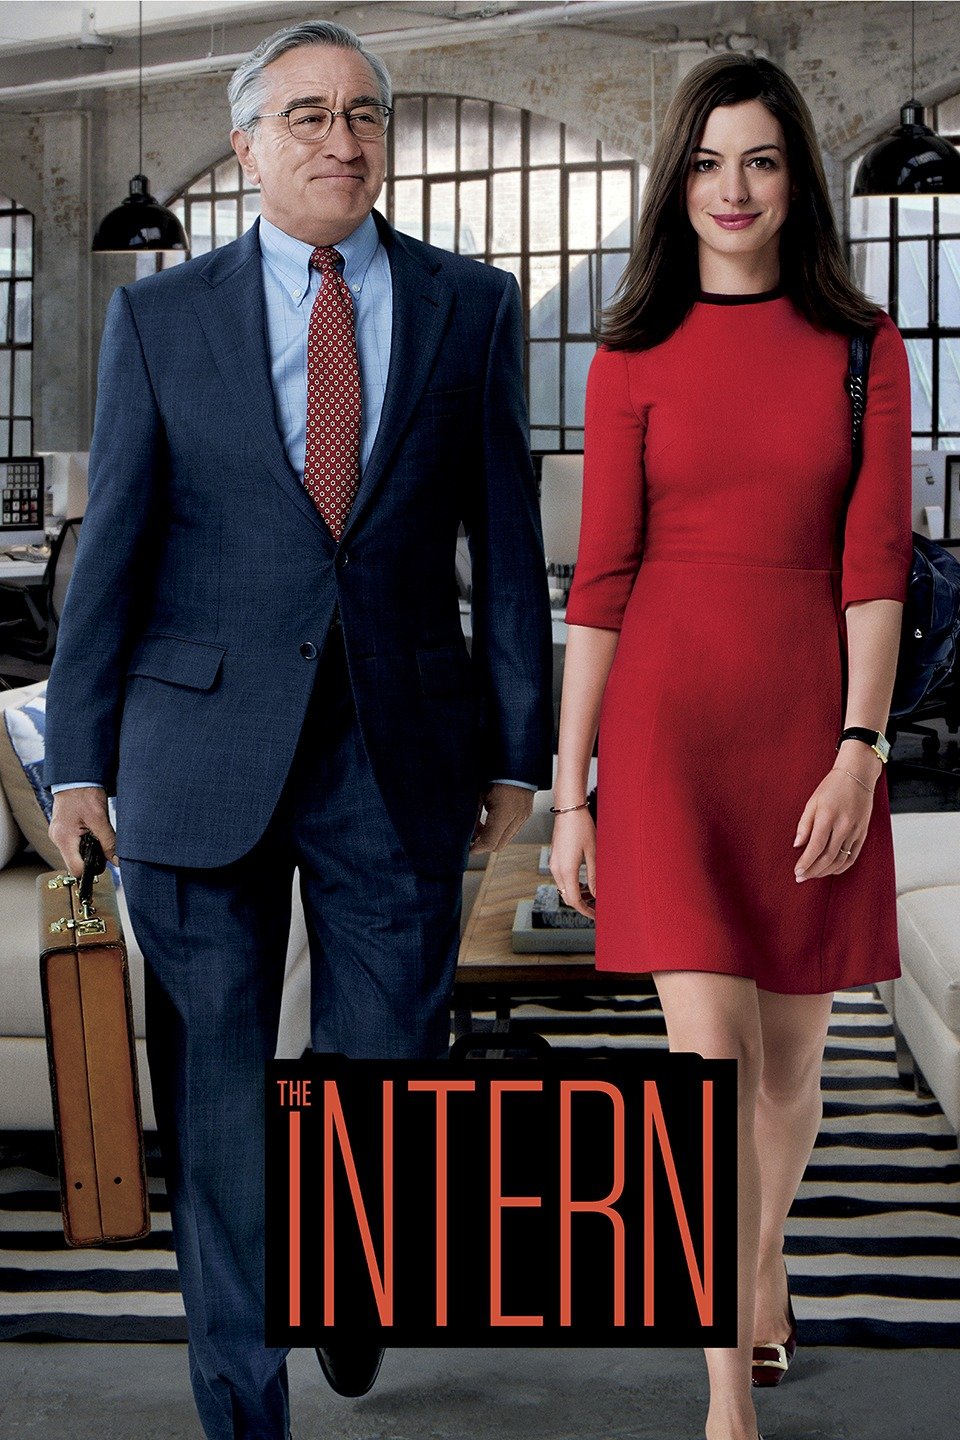 Movie: The Intern (2015) - Hollywood